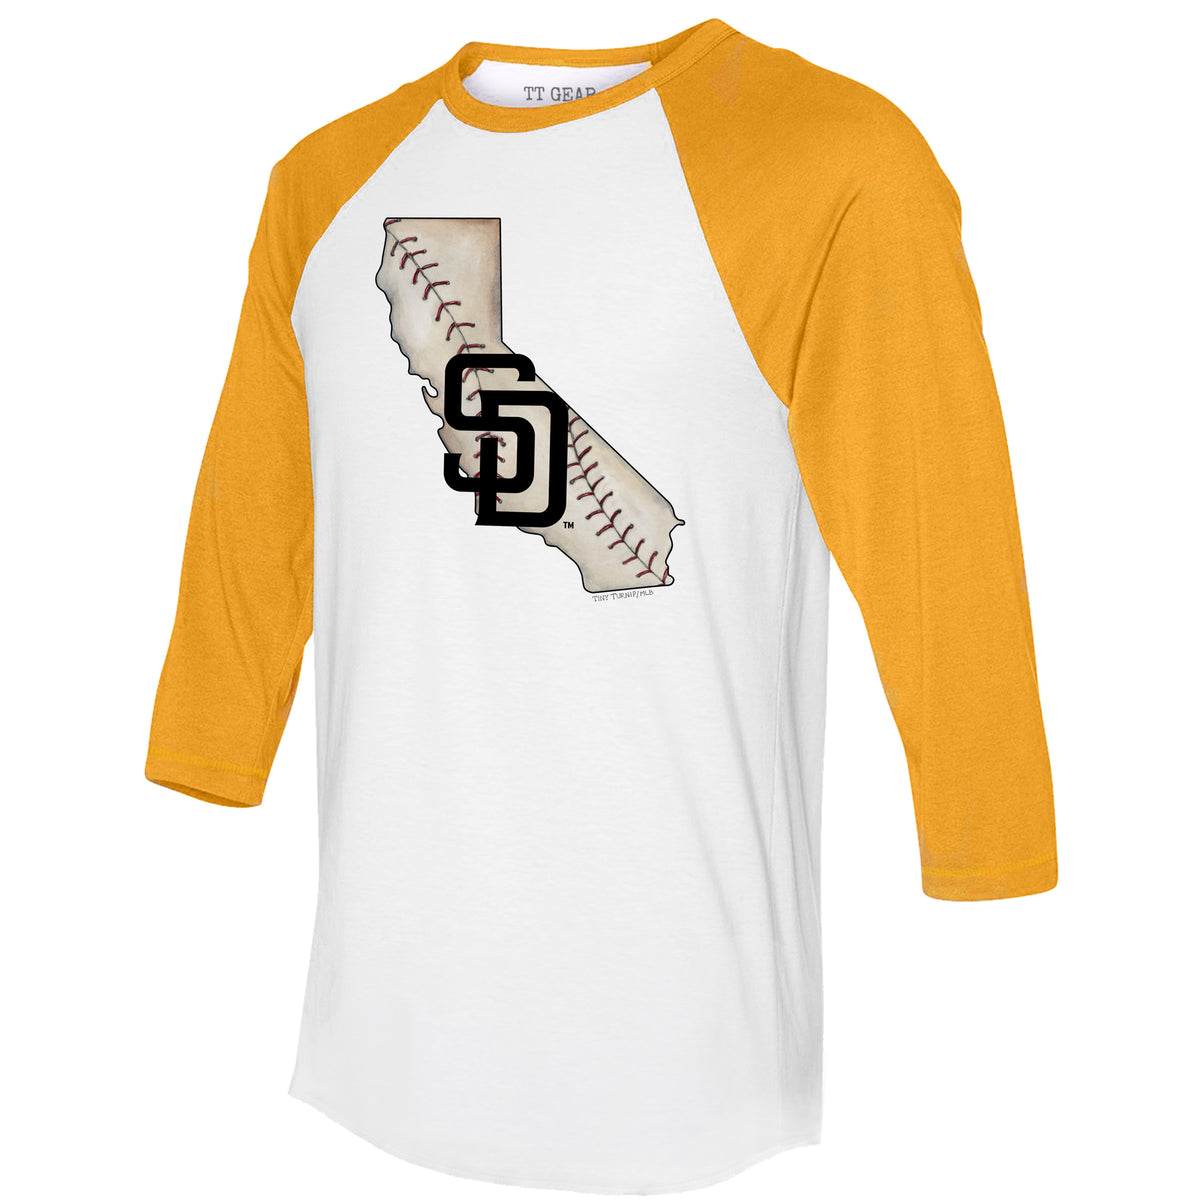 Youth Tiny Turnip White San Diego Padres Diamond Cross Bats T-Shirt Size: Small